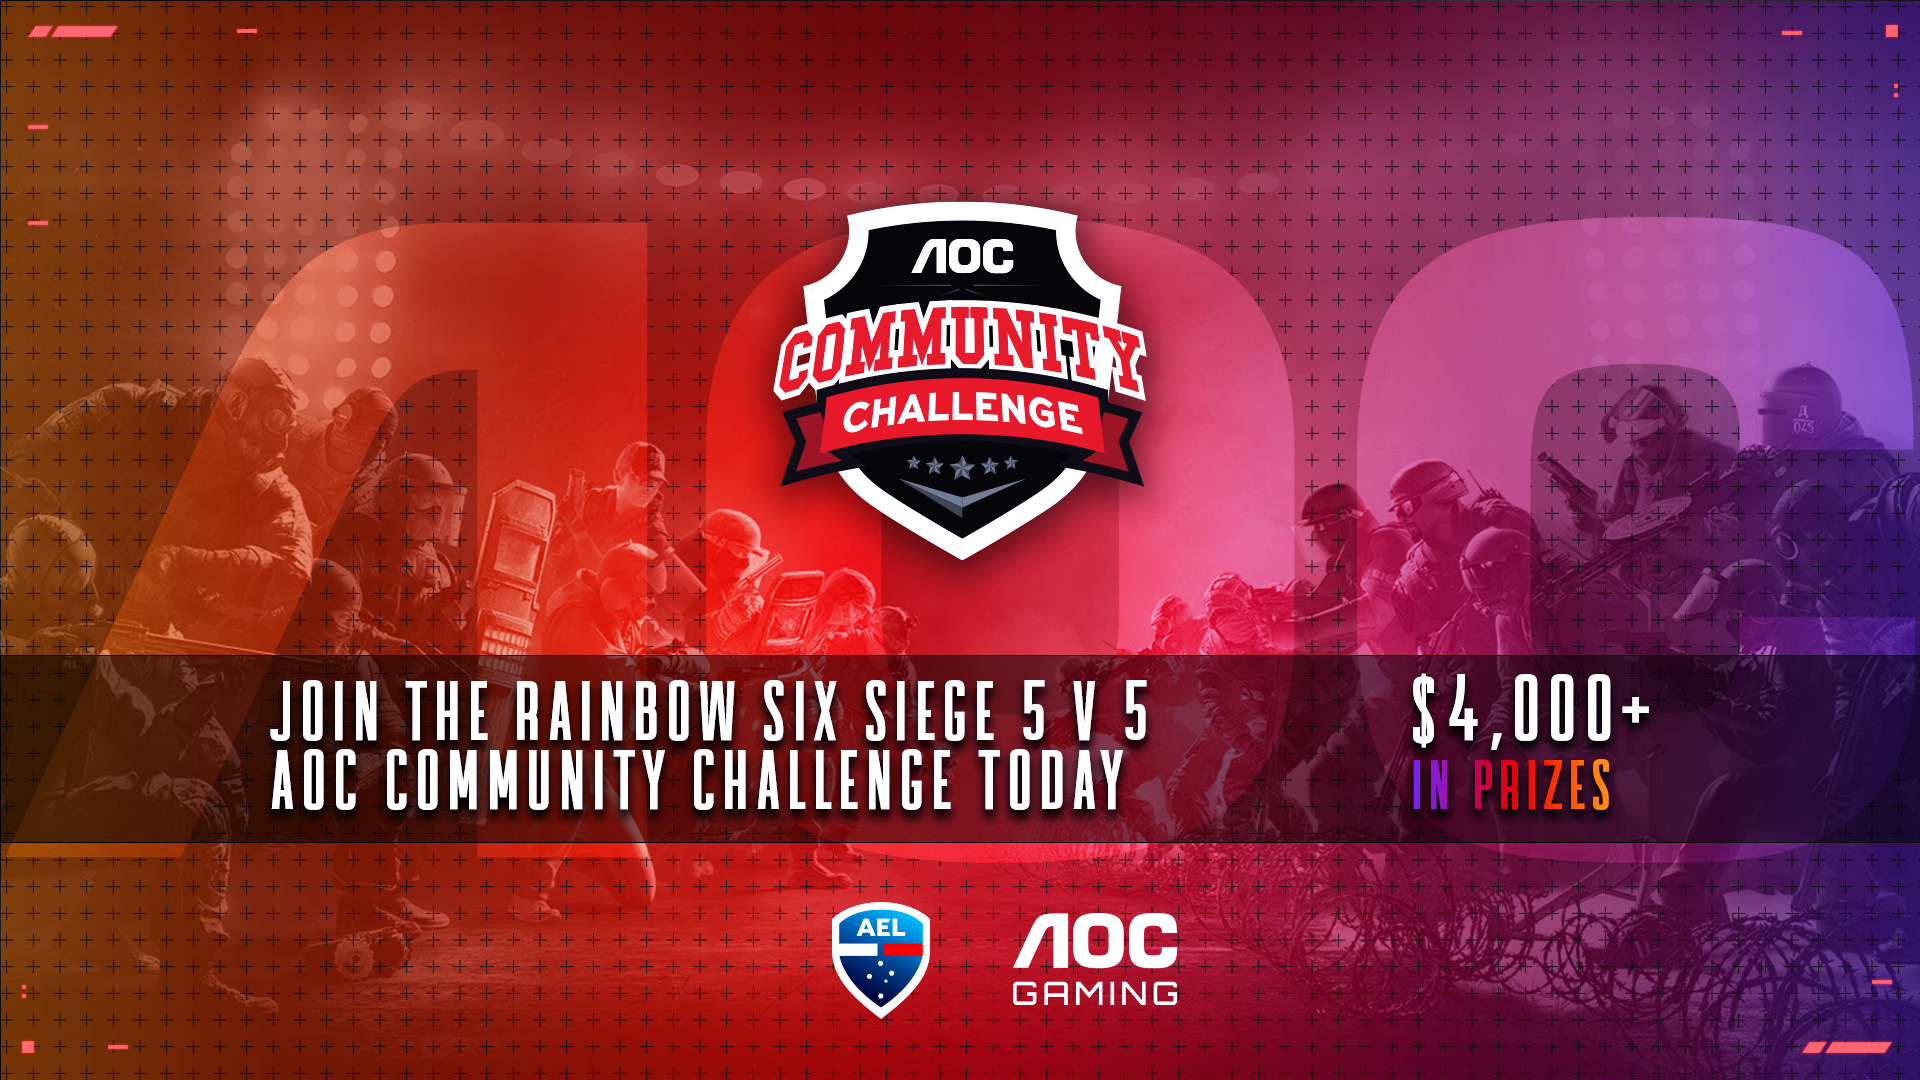 AOC Community Challenge